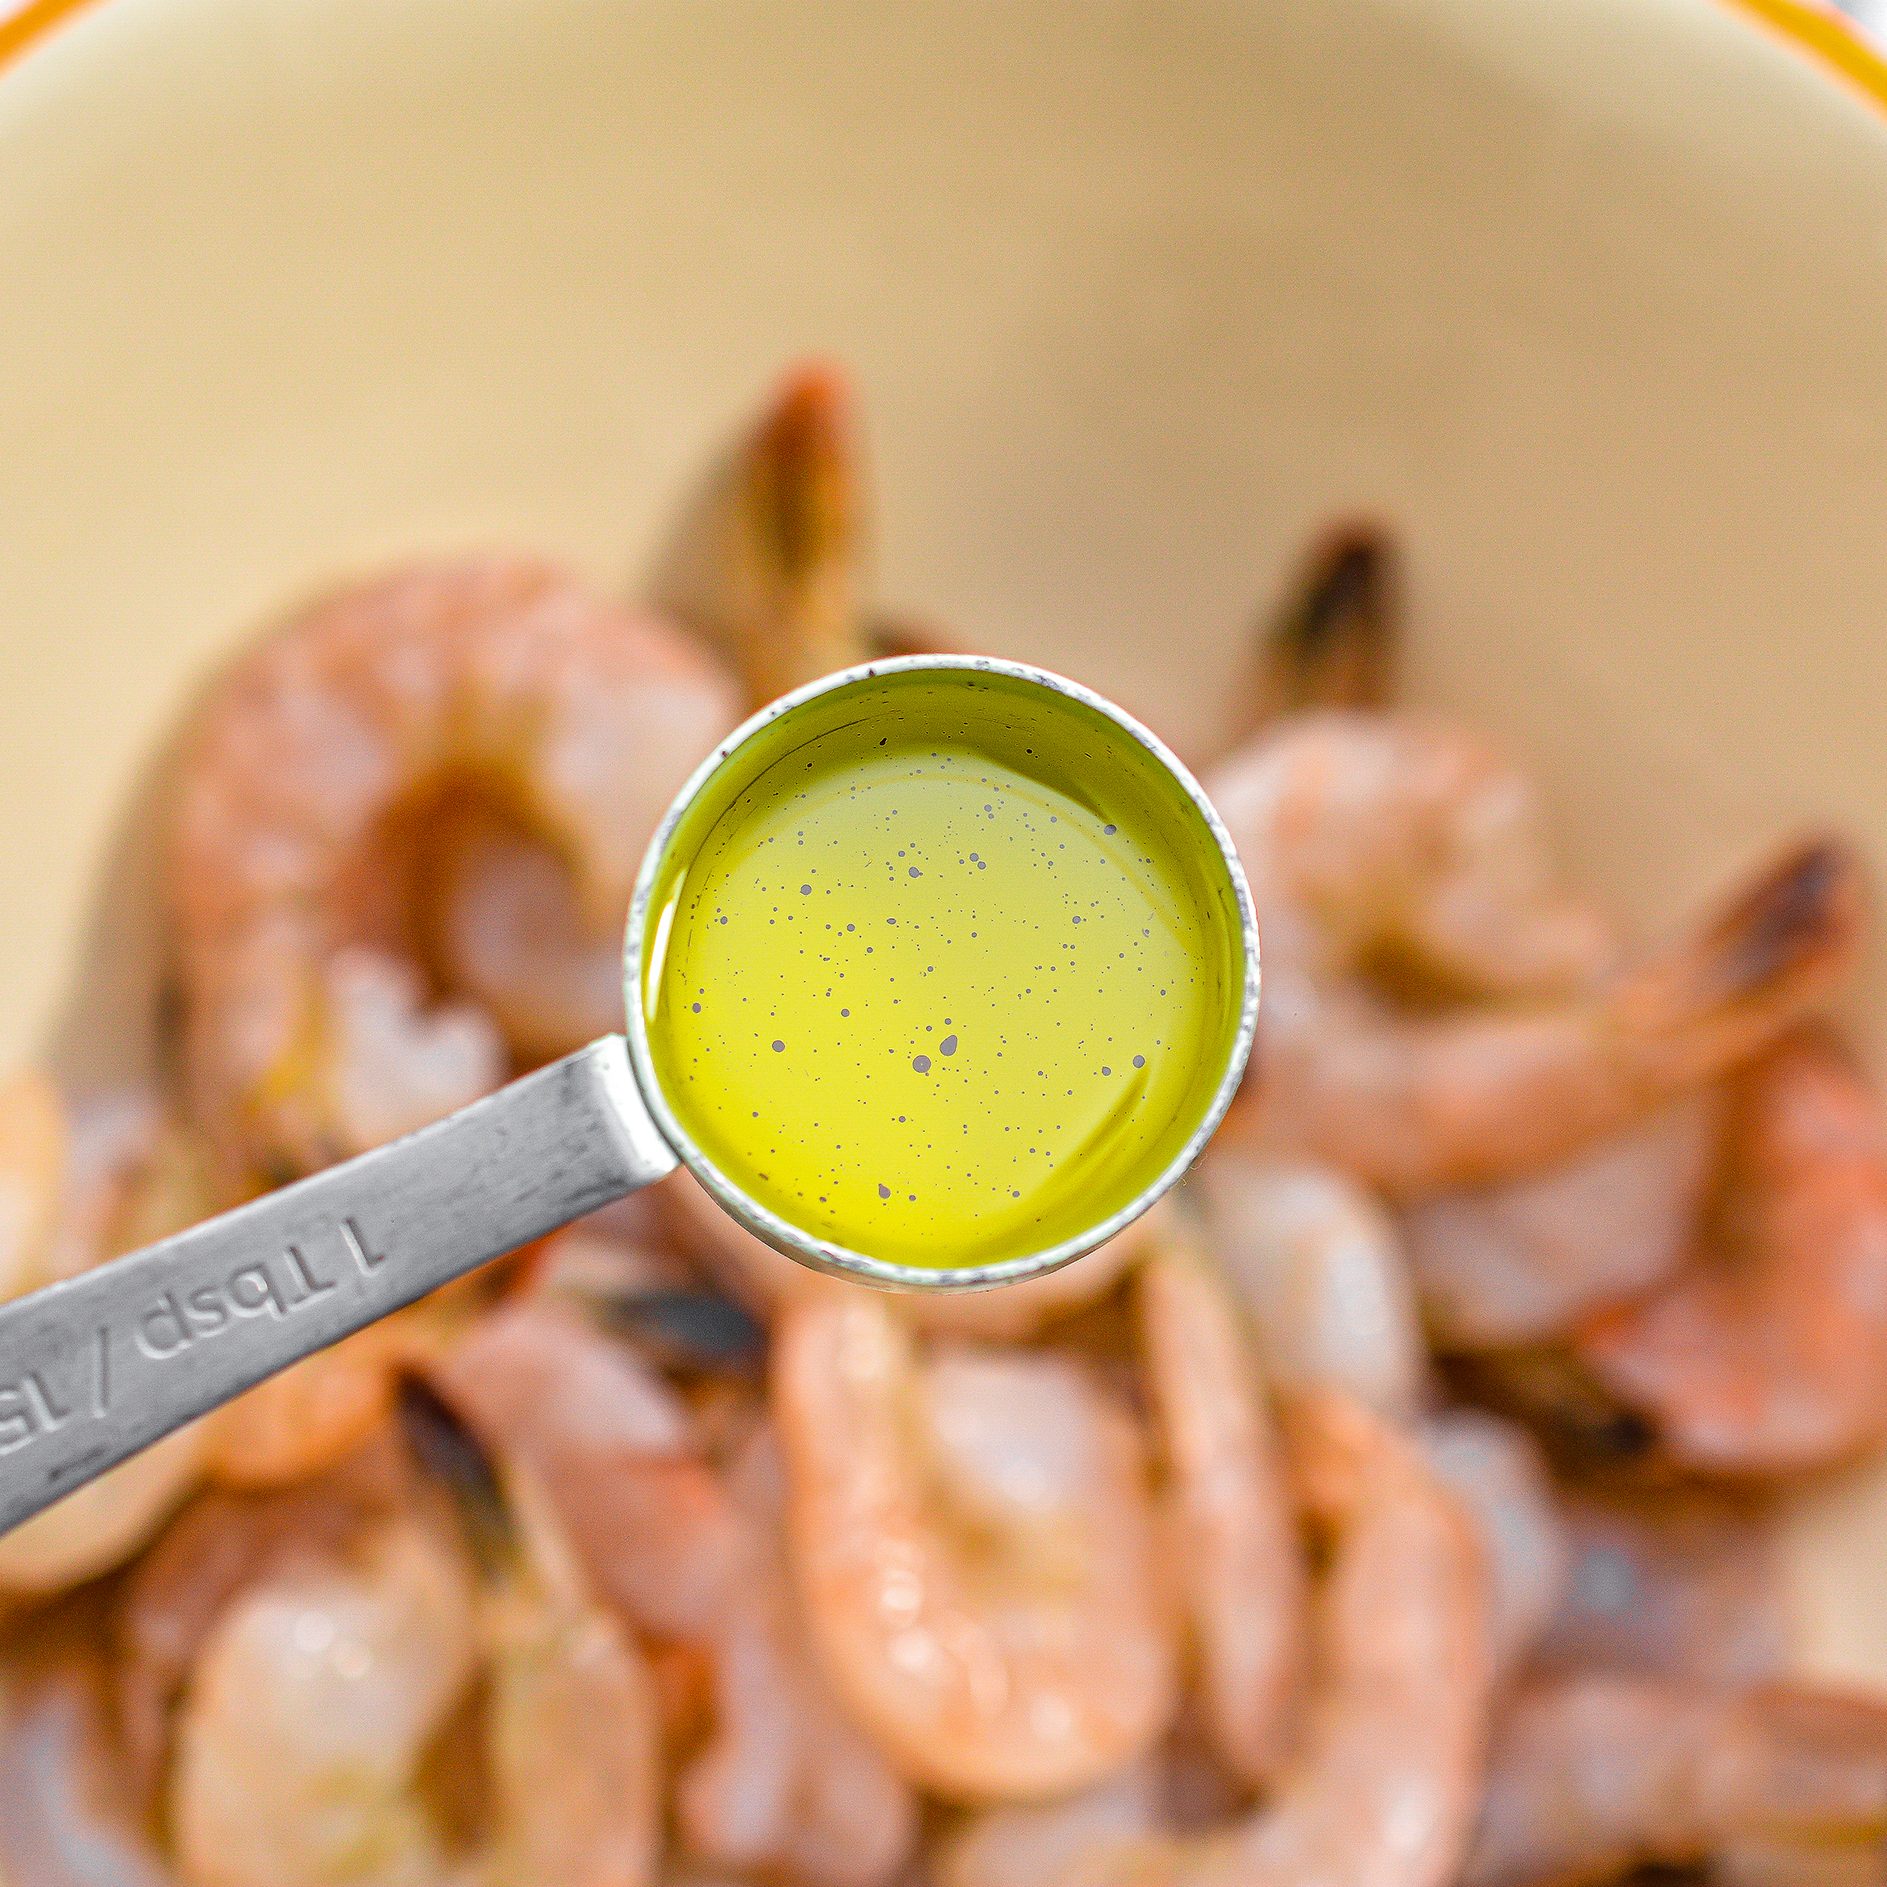 Adding olive oil